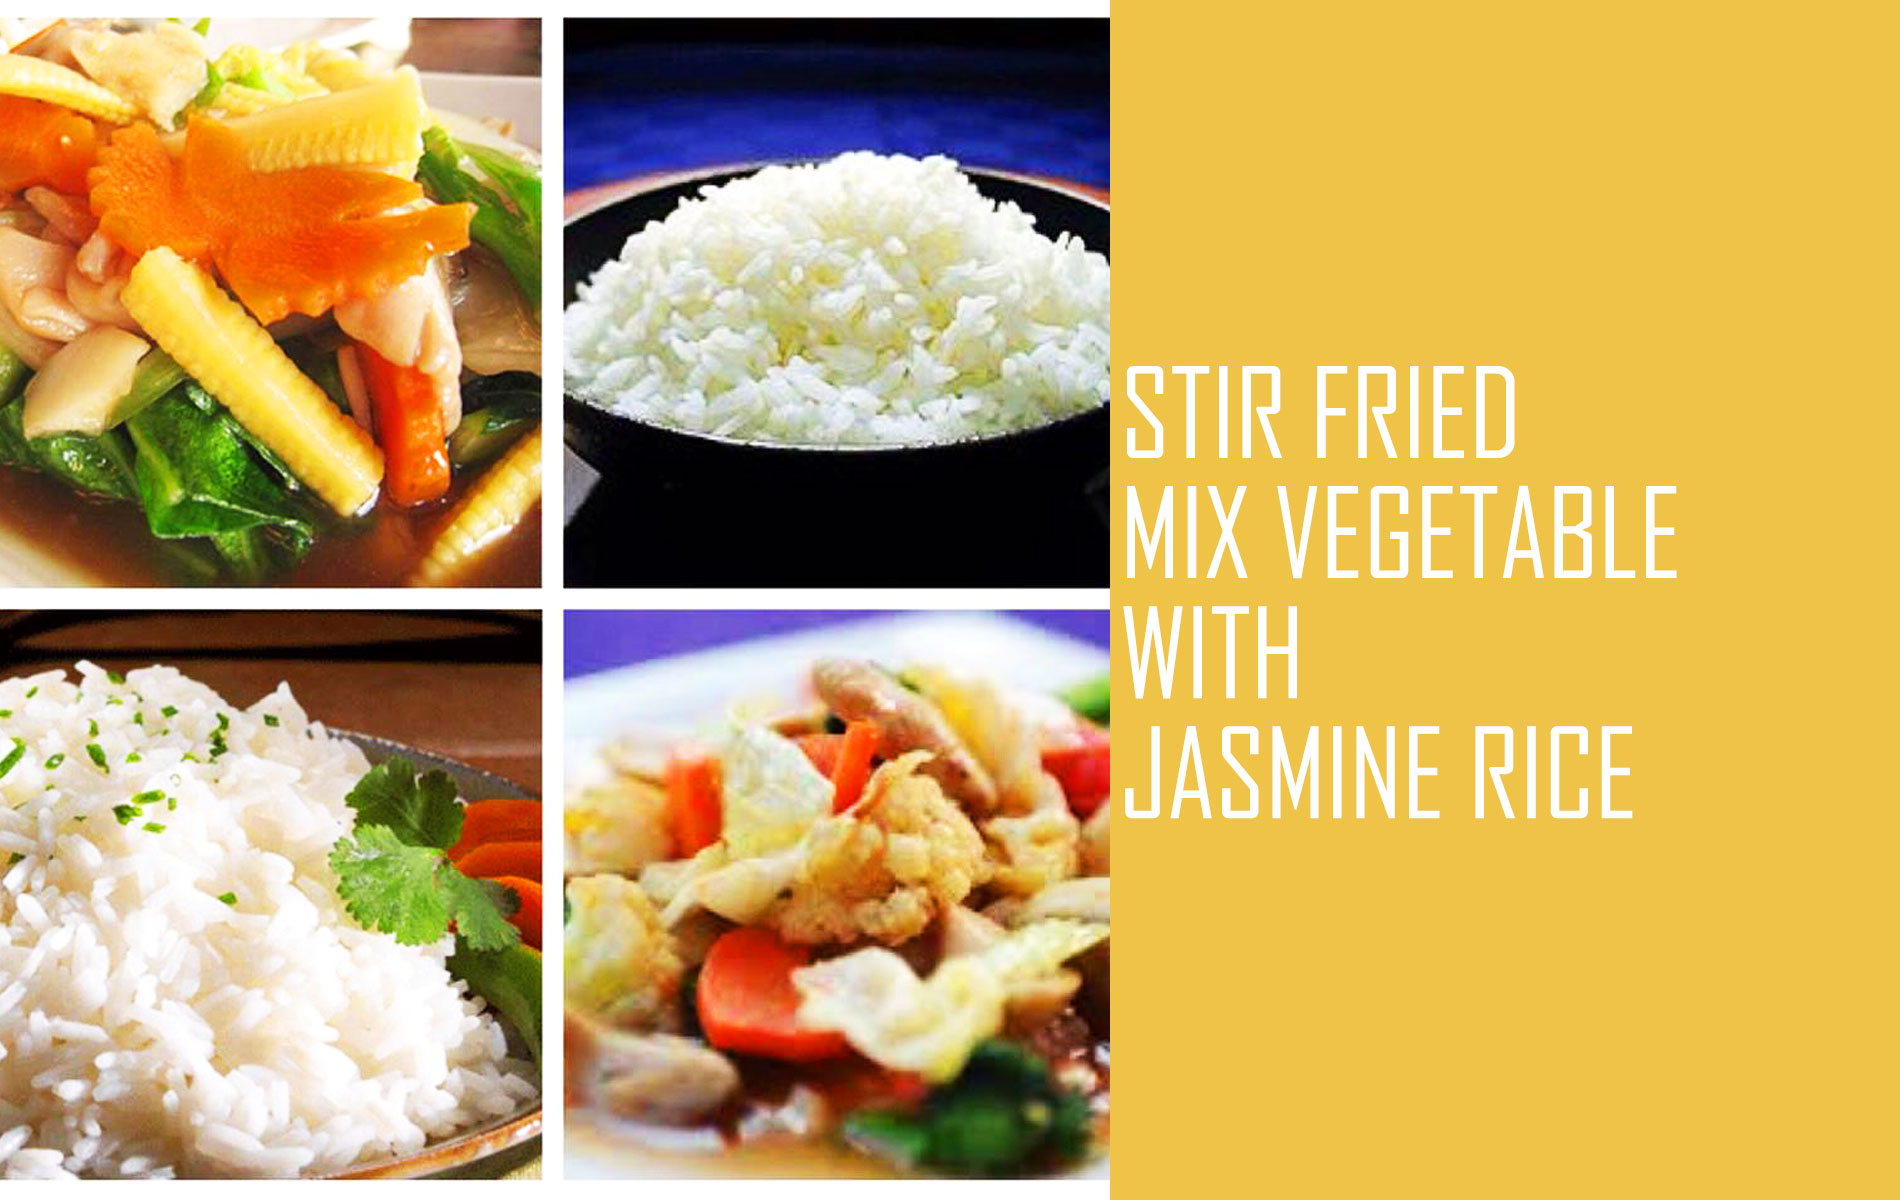 Stir Fried Mix Vegetable With Jasmine Rice